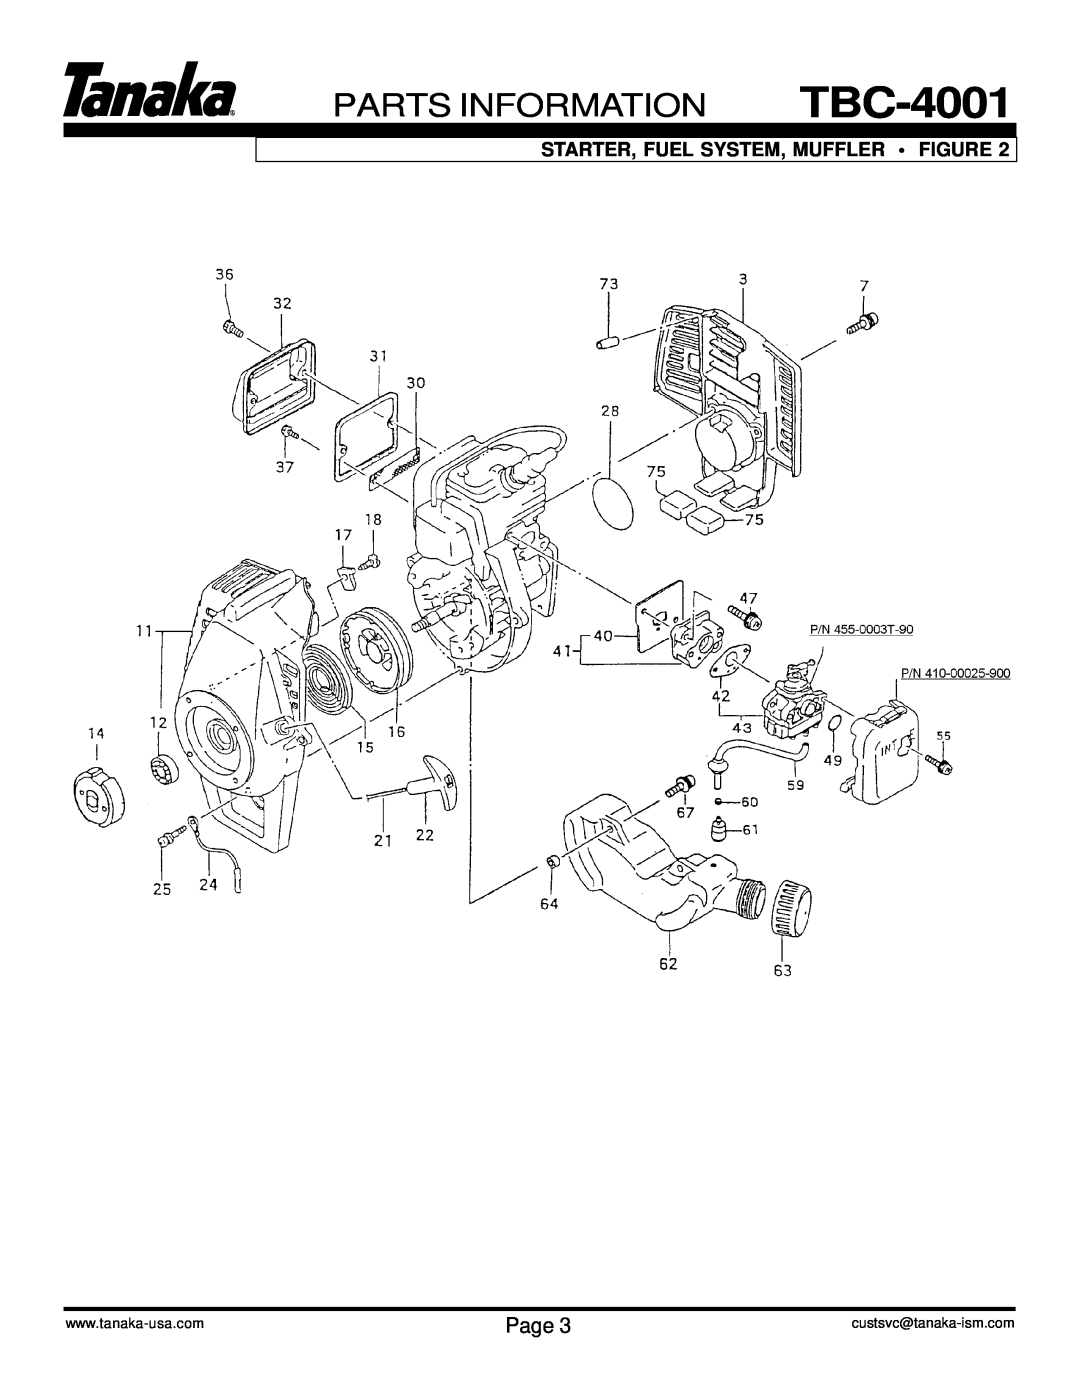 Tanaka manual PARTS INFORMATION TBC-4001, Page, Starter, Fuel System, Muffler Figure, custsvc@tanaka-ism.com 